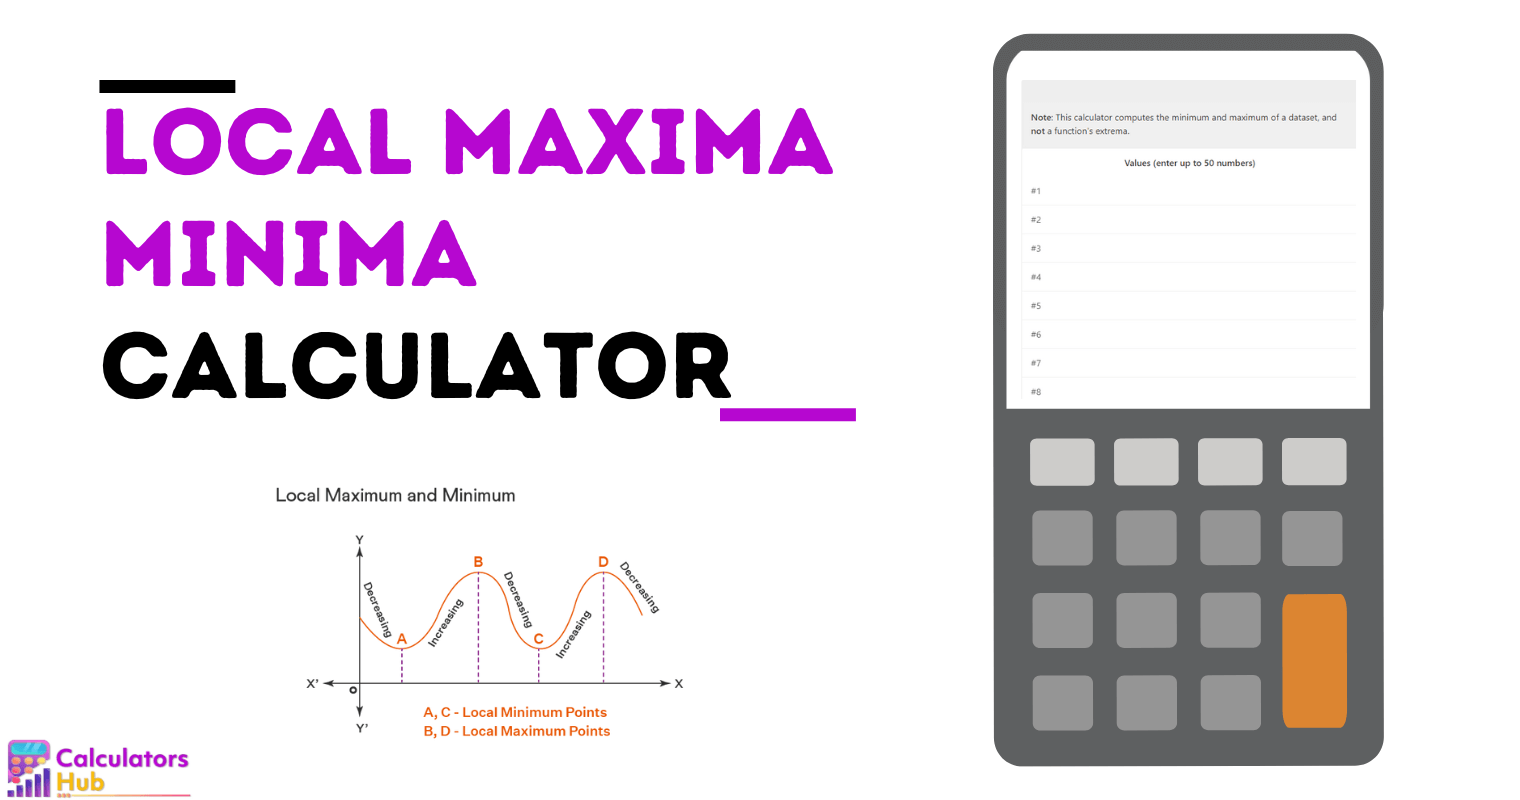 Calculateur de maxima minima locaux